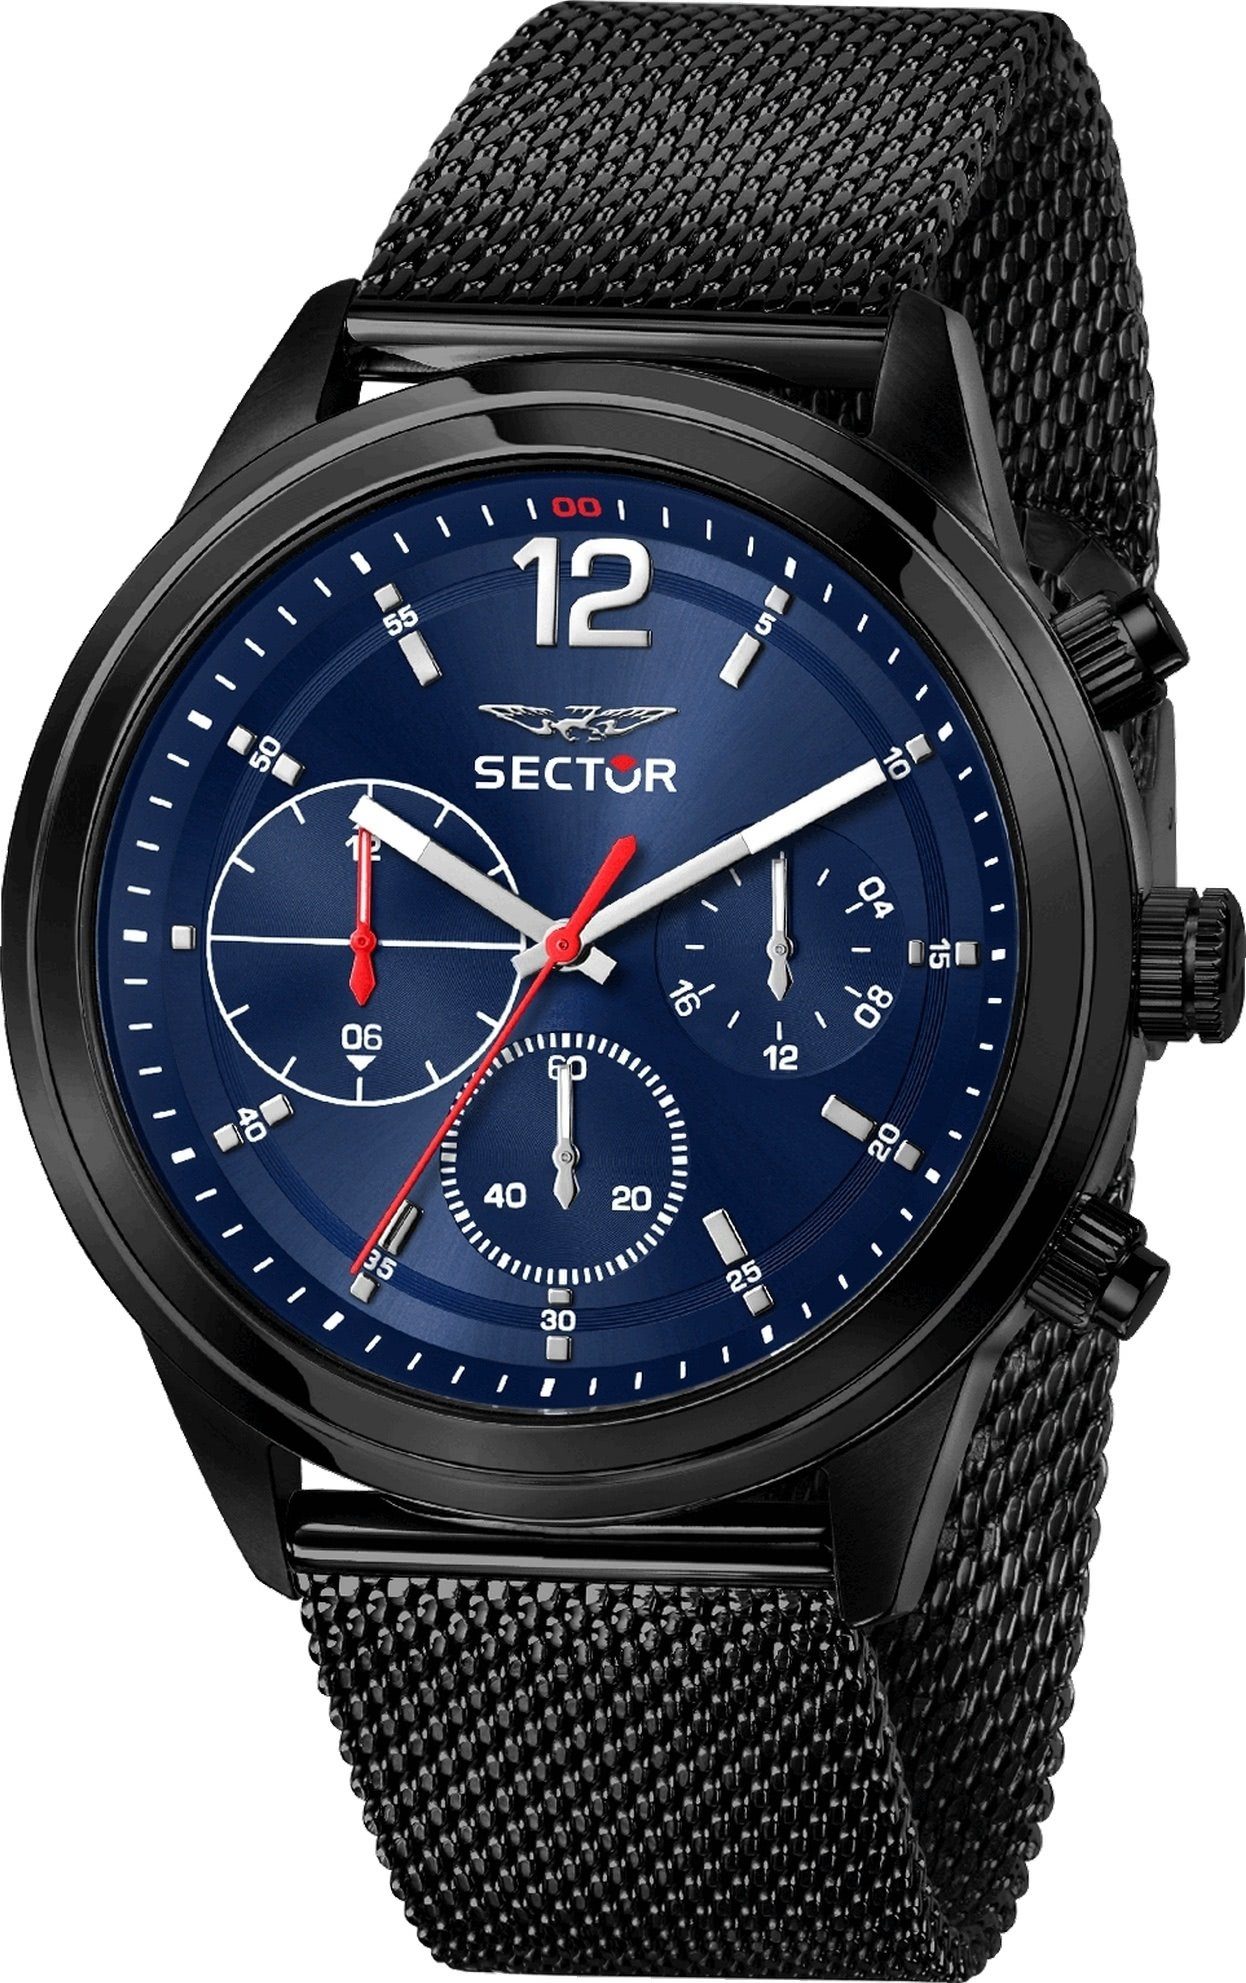 Herren Sector Edelstahlarmband Multifunktionsuhr rund, groß schwarz Armbanduhr (ca. 45,5x39mm), Sector Armbanduhr Multifunkt, Herren